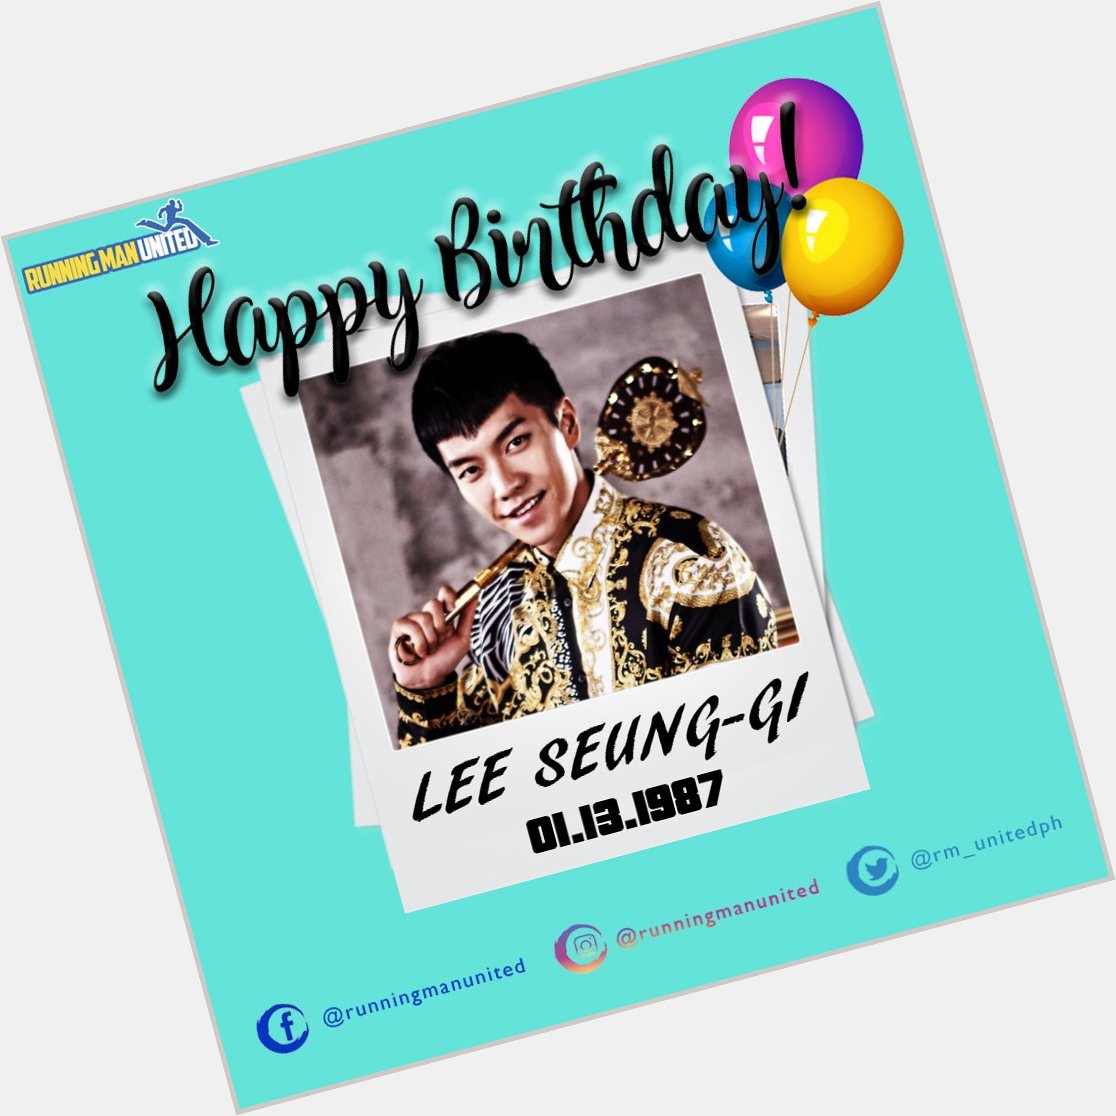 Happy Birthday Lee Seung-gi! 